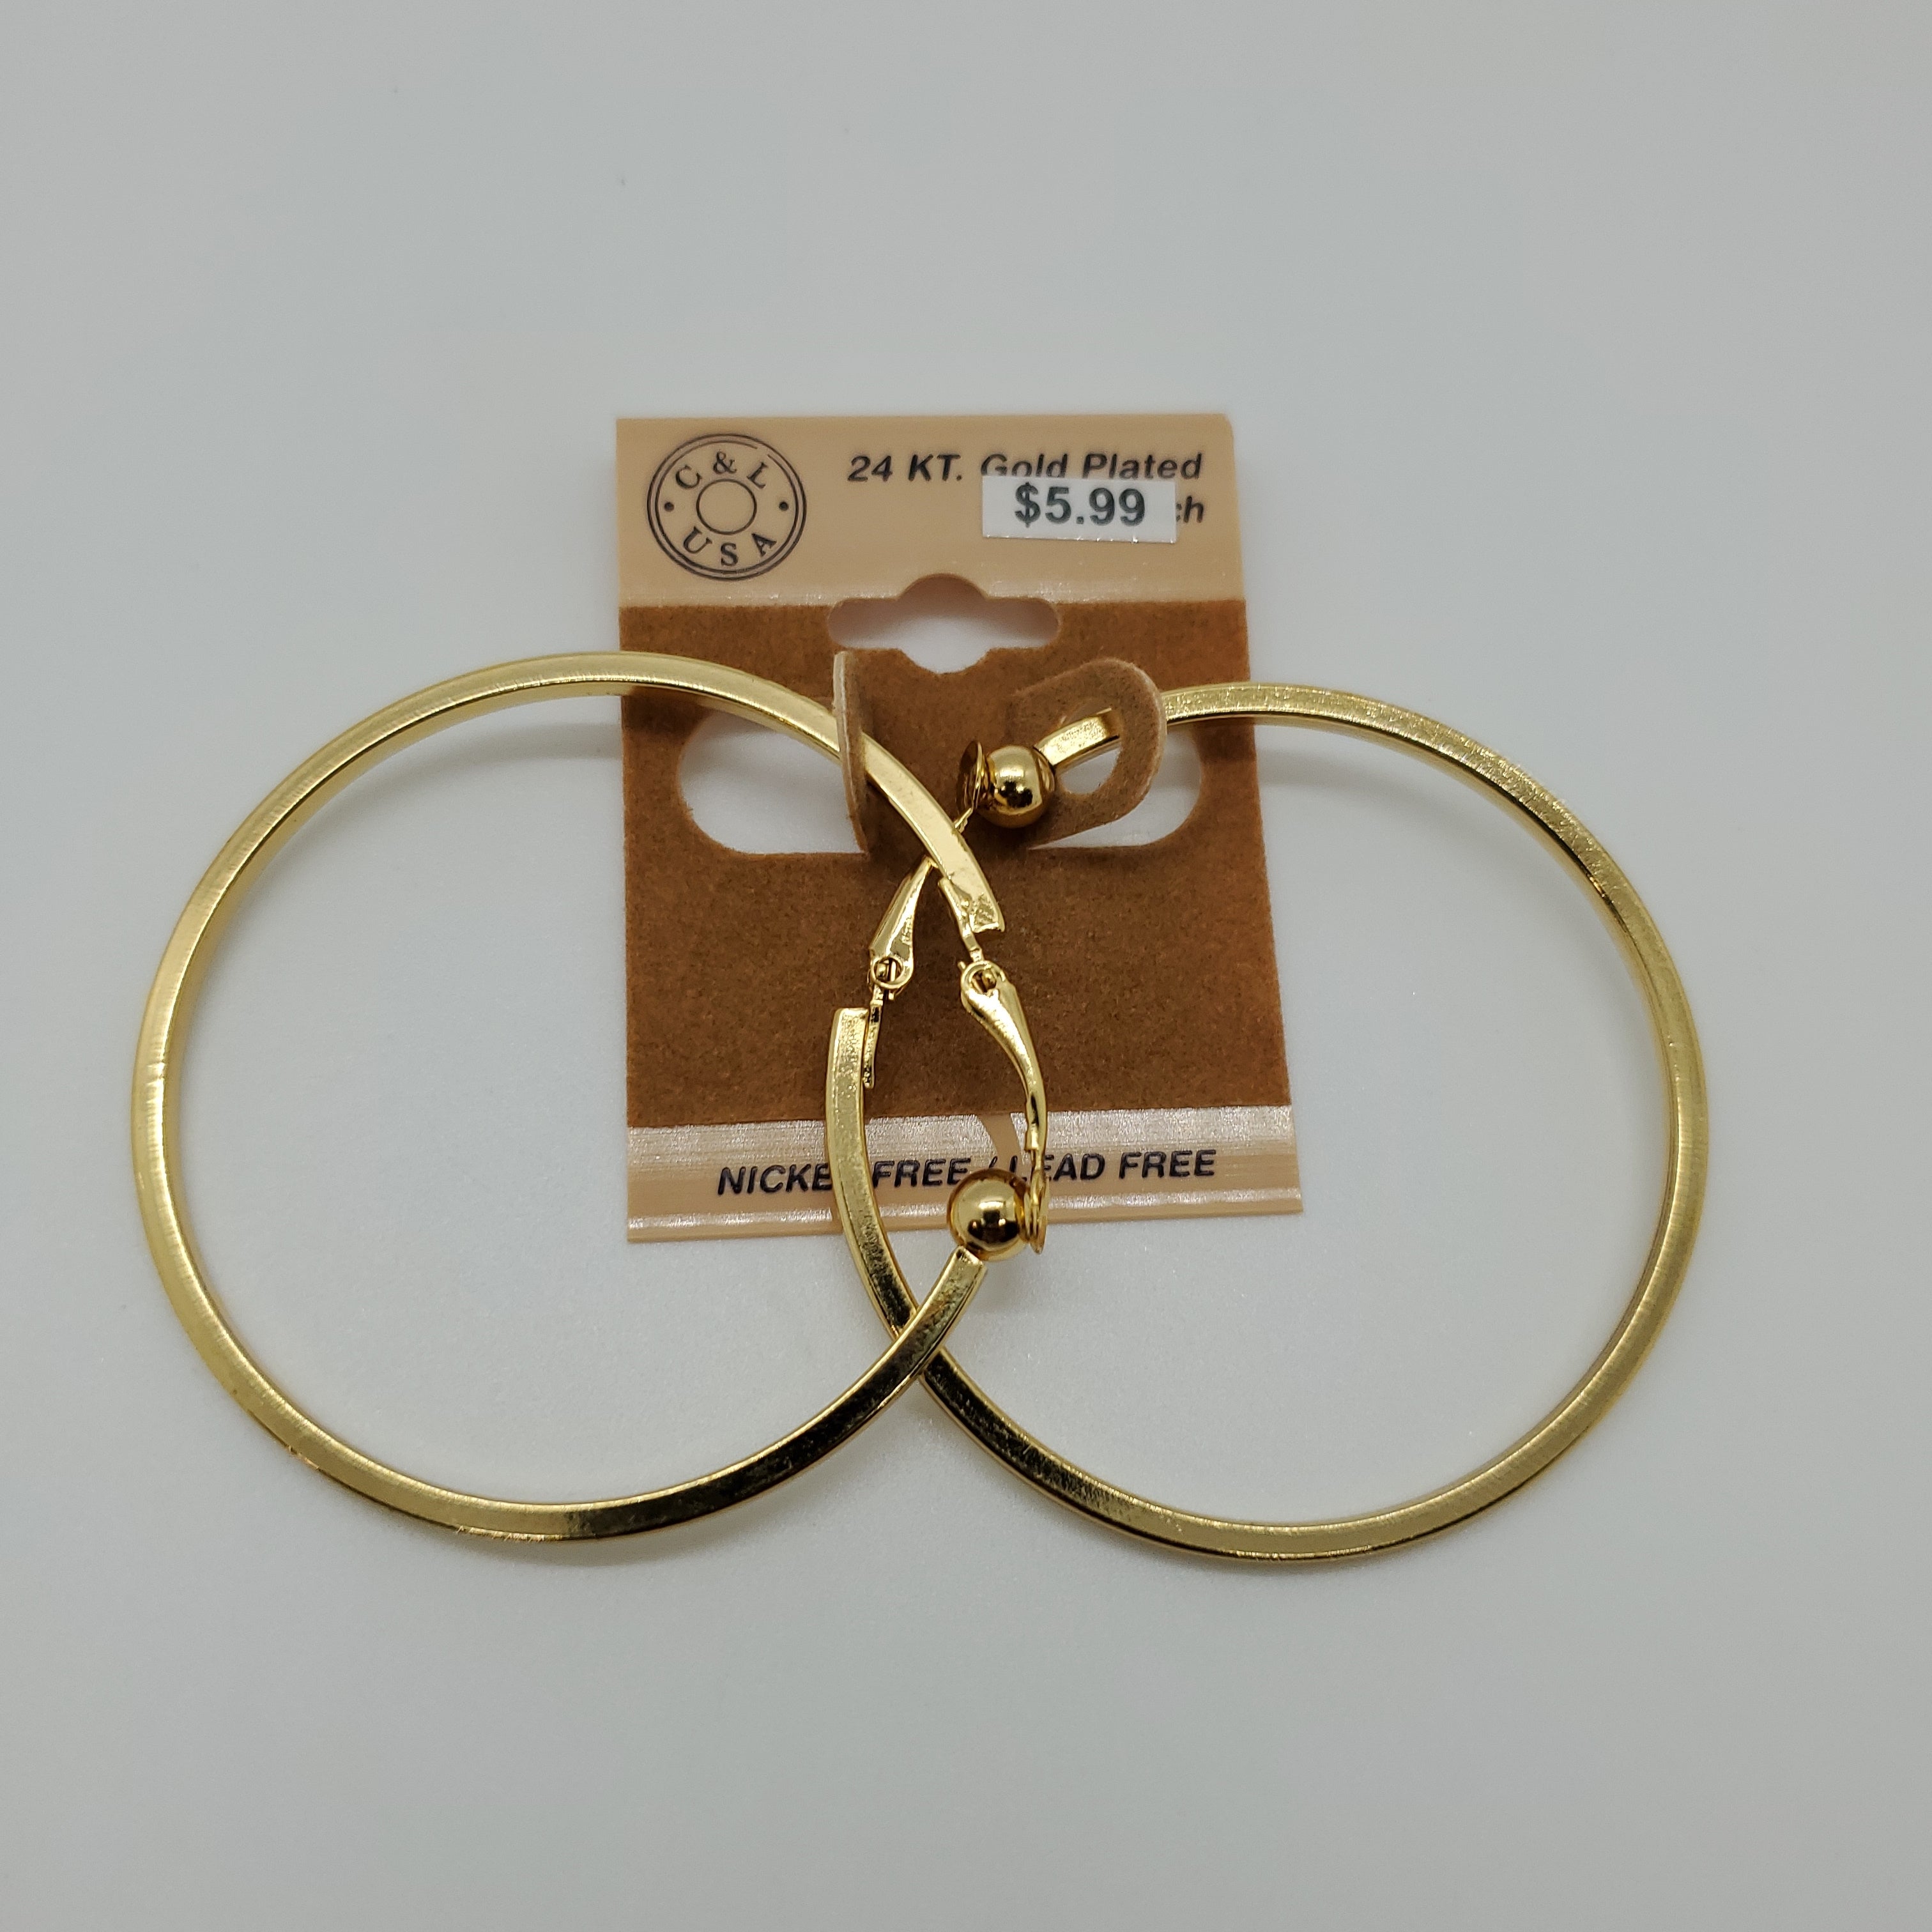 24KT Gold Plated Clip On Hoop Earrings NPK208 - Beauty Bar & Supply